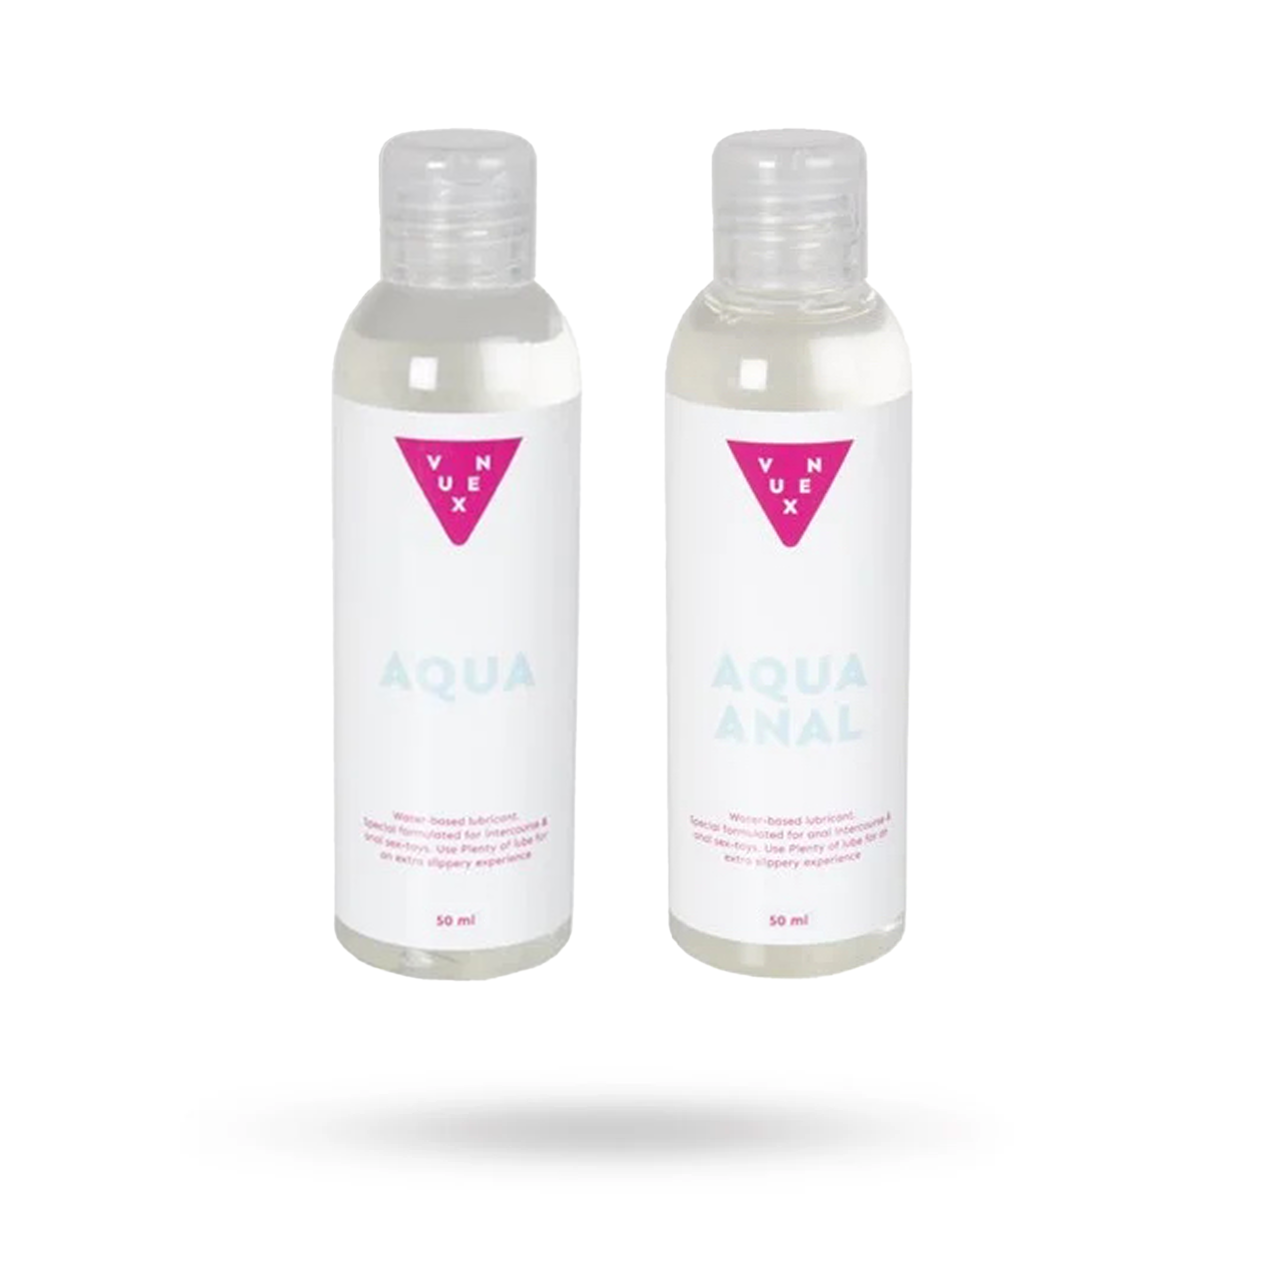 Vuxen Aqua Glidecreme & Aqua Anal Glidecreme 2x50 Ml